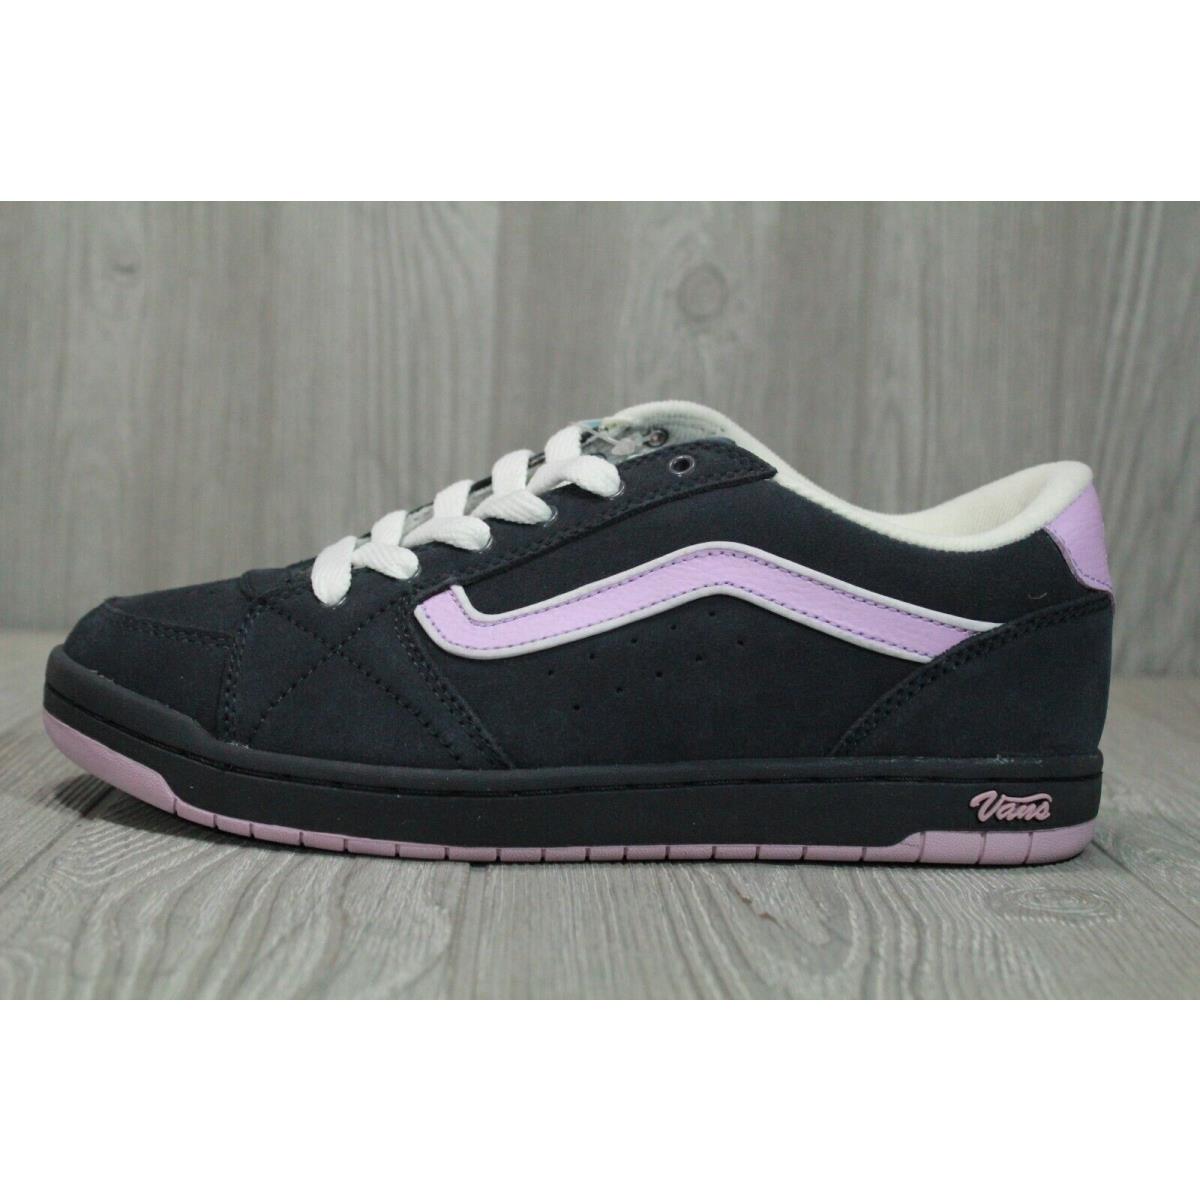 Vintage Vans Gia 2005 Black Pink Womens Skate Shoes Size 9.5